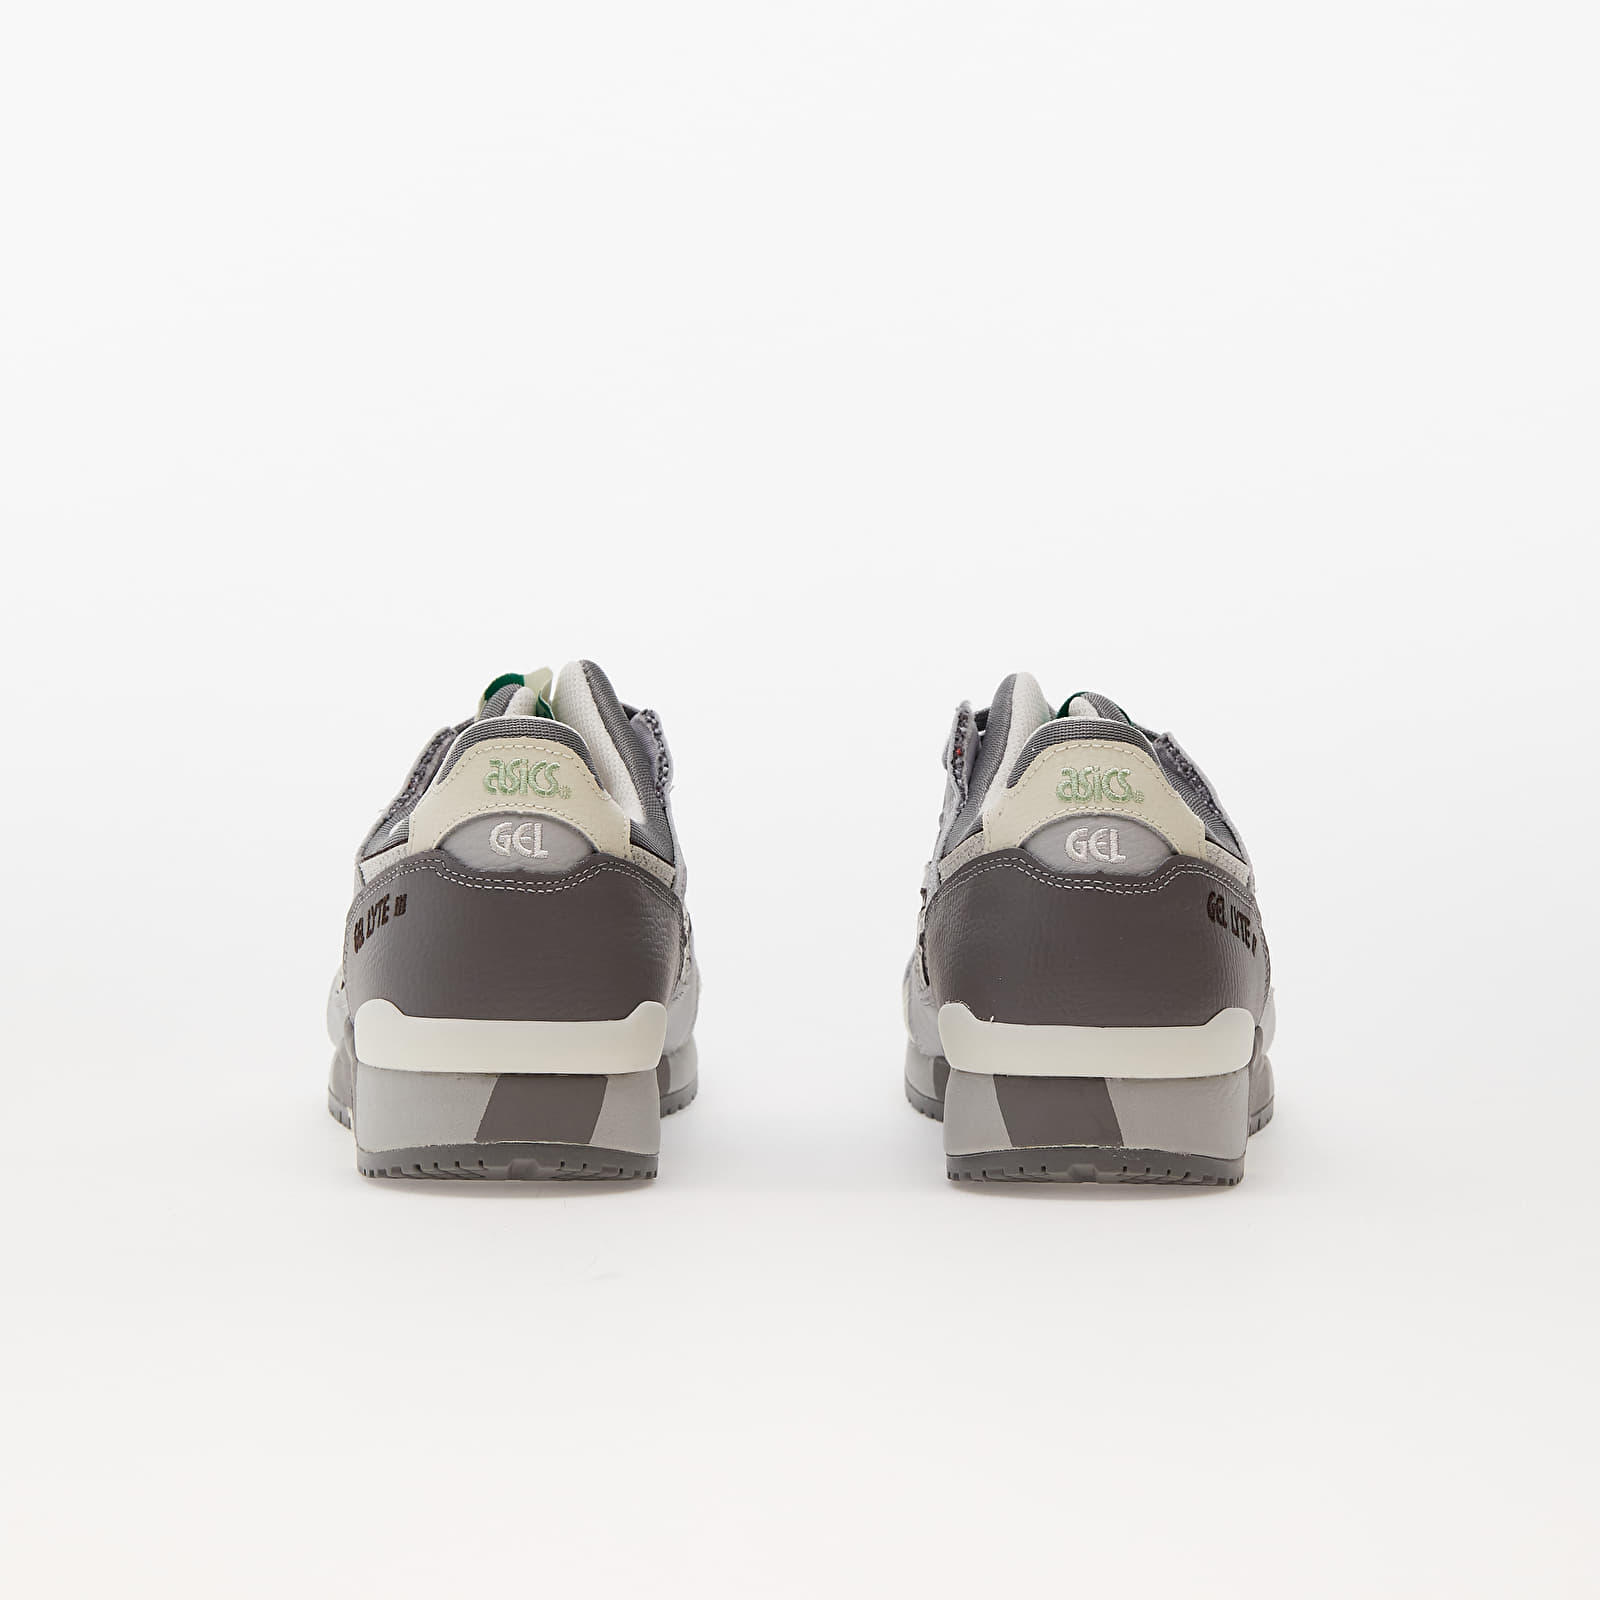 Chaussures et baskets homme Asics Gel-Lyte III OG White/ Oyster Grey